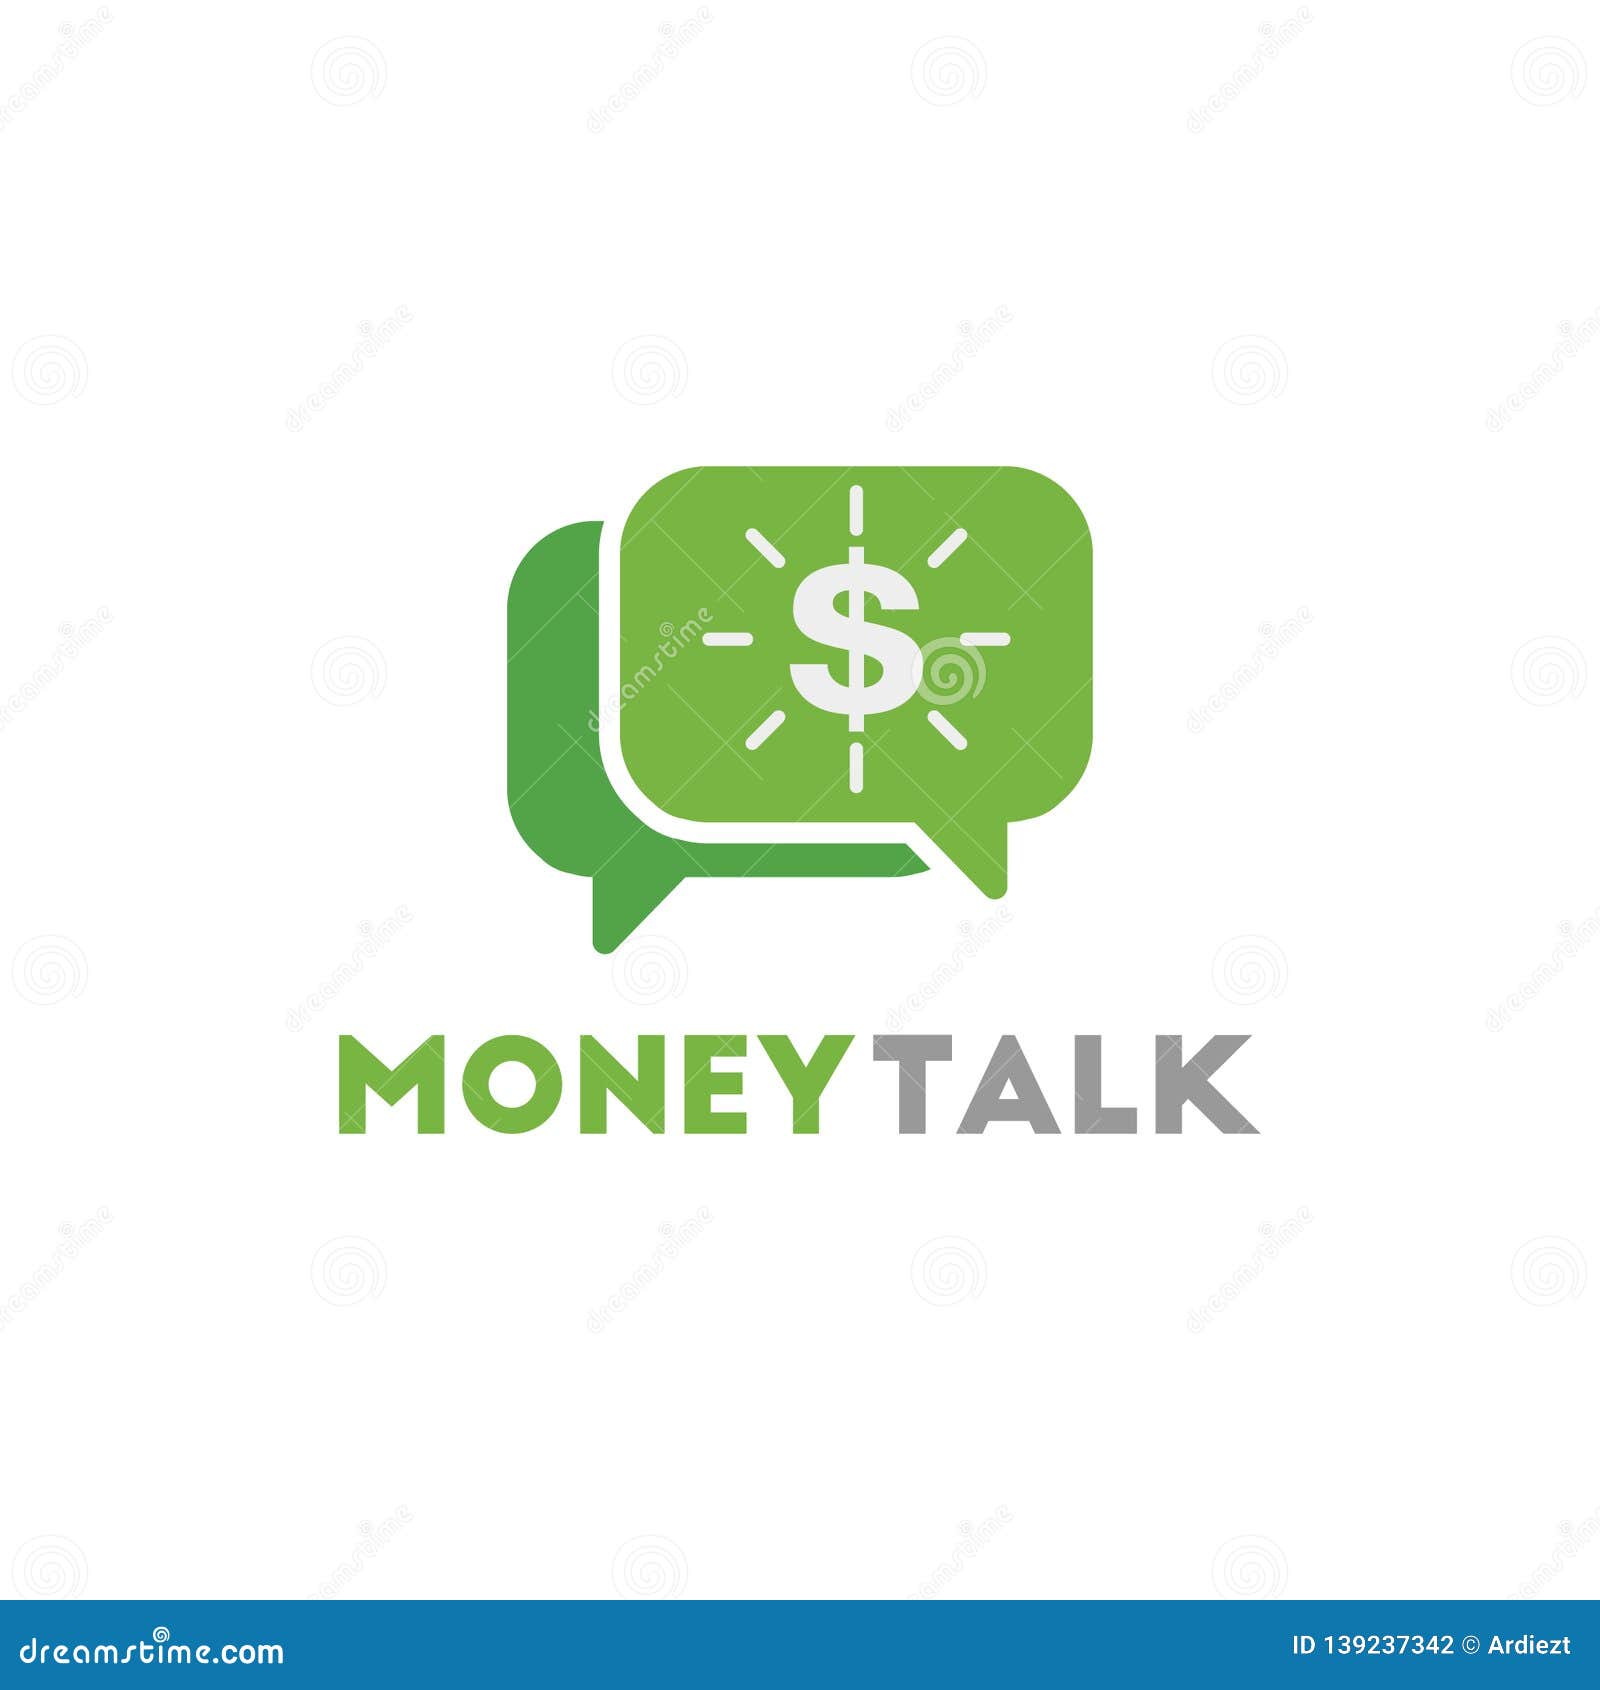 bussines talk, making money forum icon